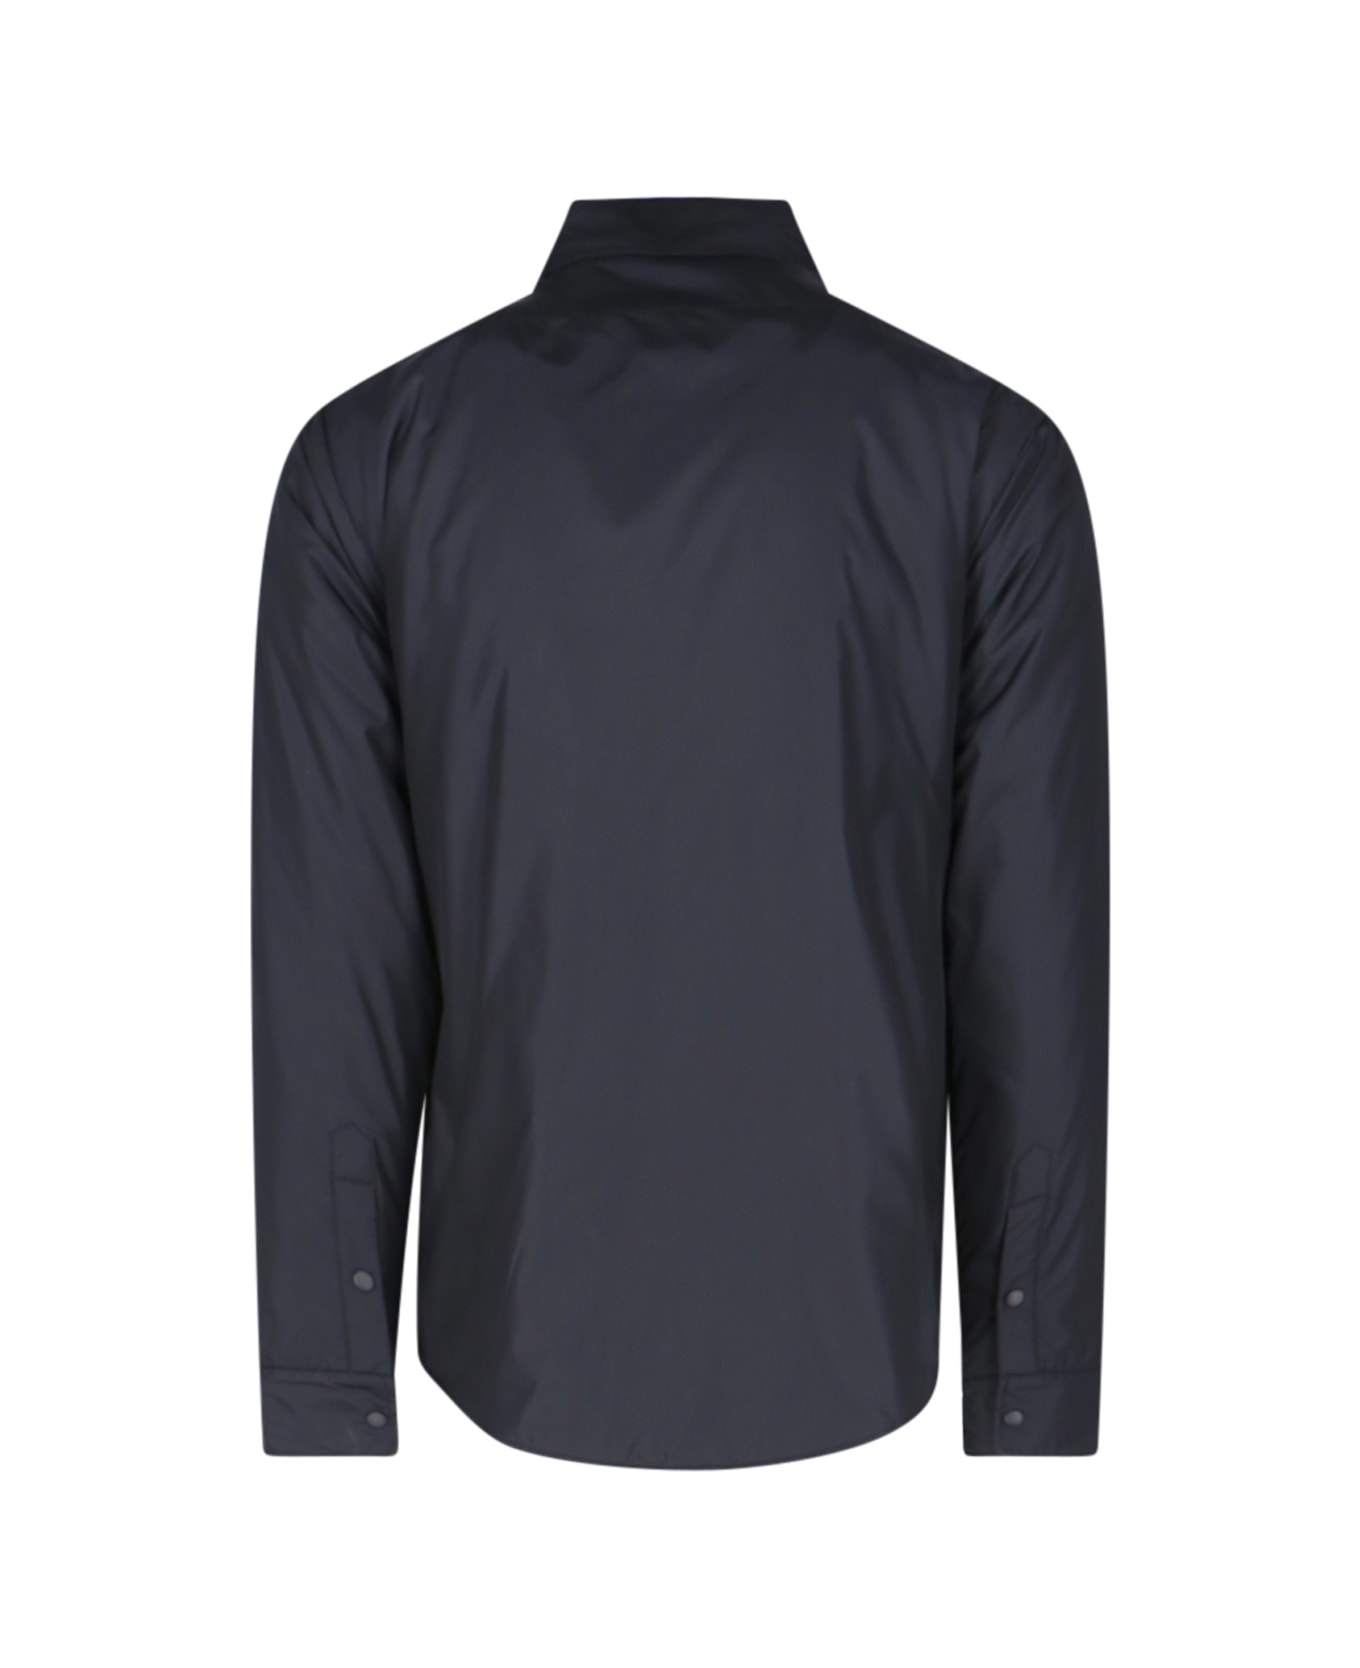 Aspesi 're-shirt' Jacket - BLACK